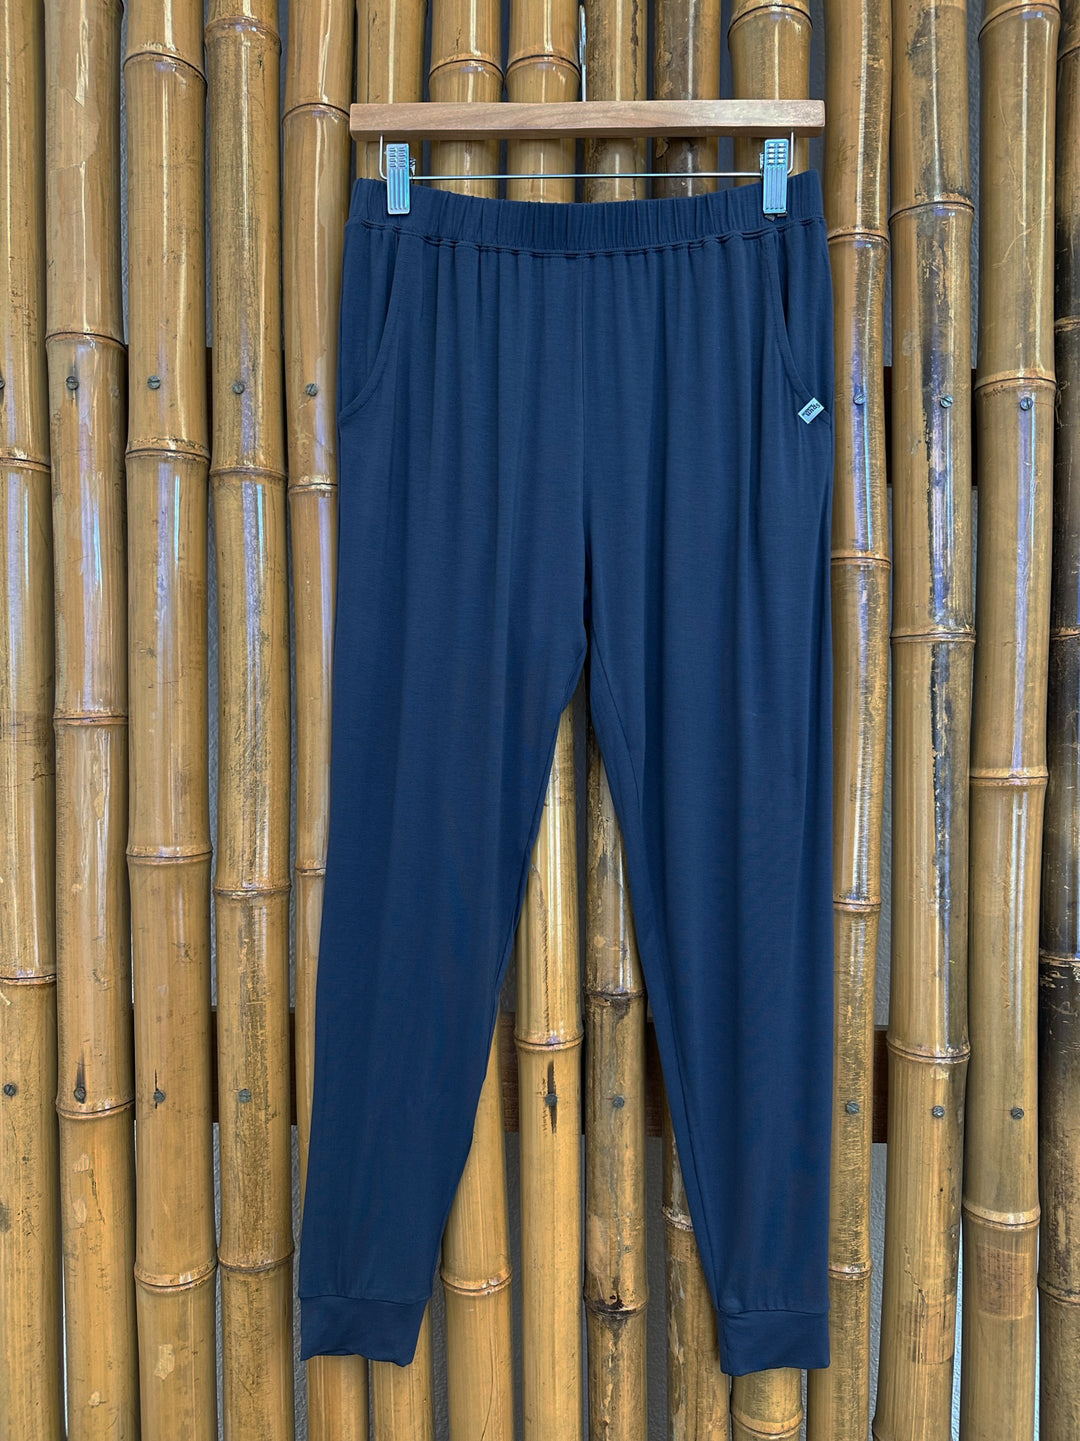 Bamboo/Cotton Plain/Print Yoga Pant, Size: S/M/L/XL/XXL at Rs 1299 in  Tiruppur